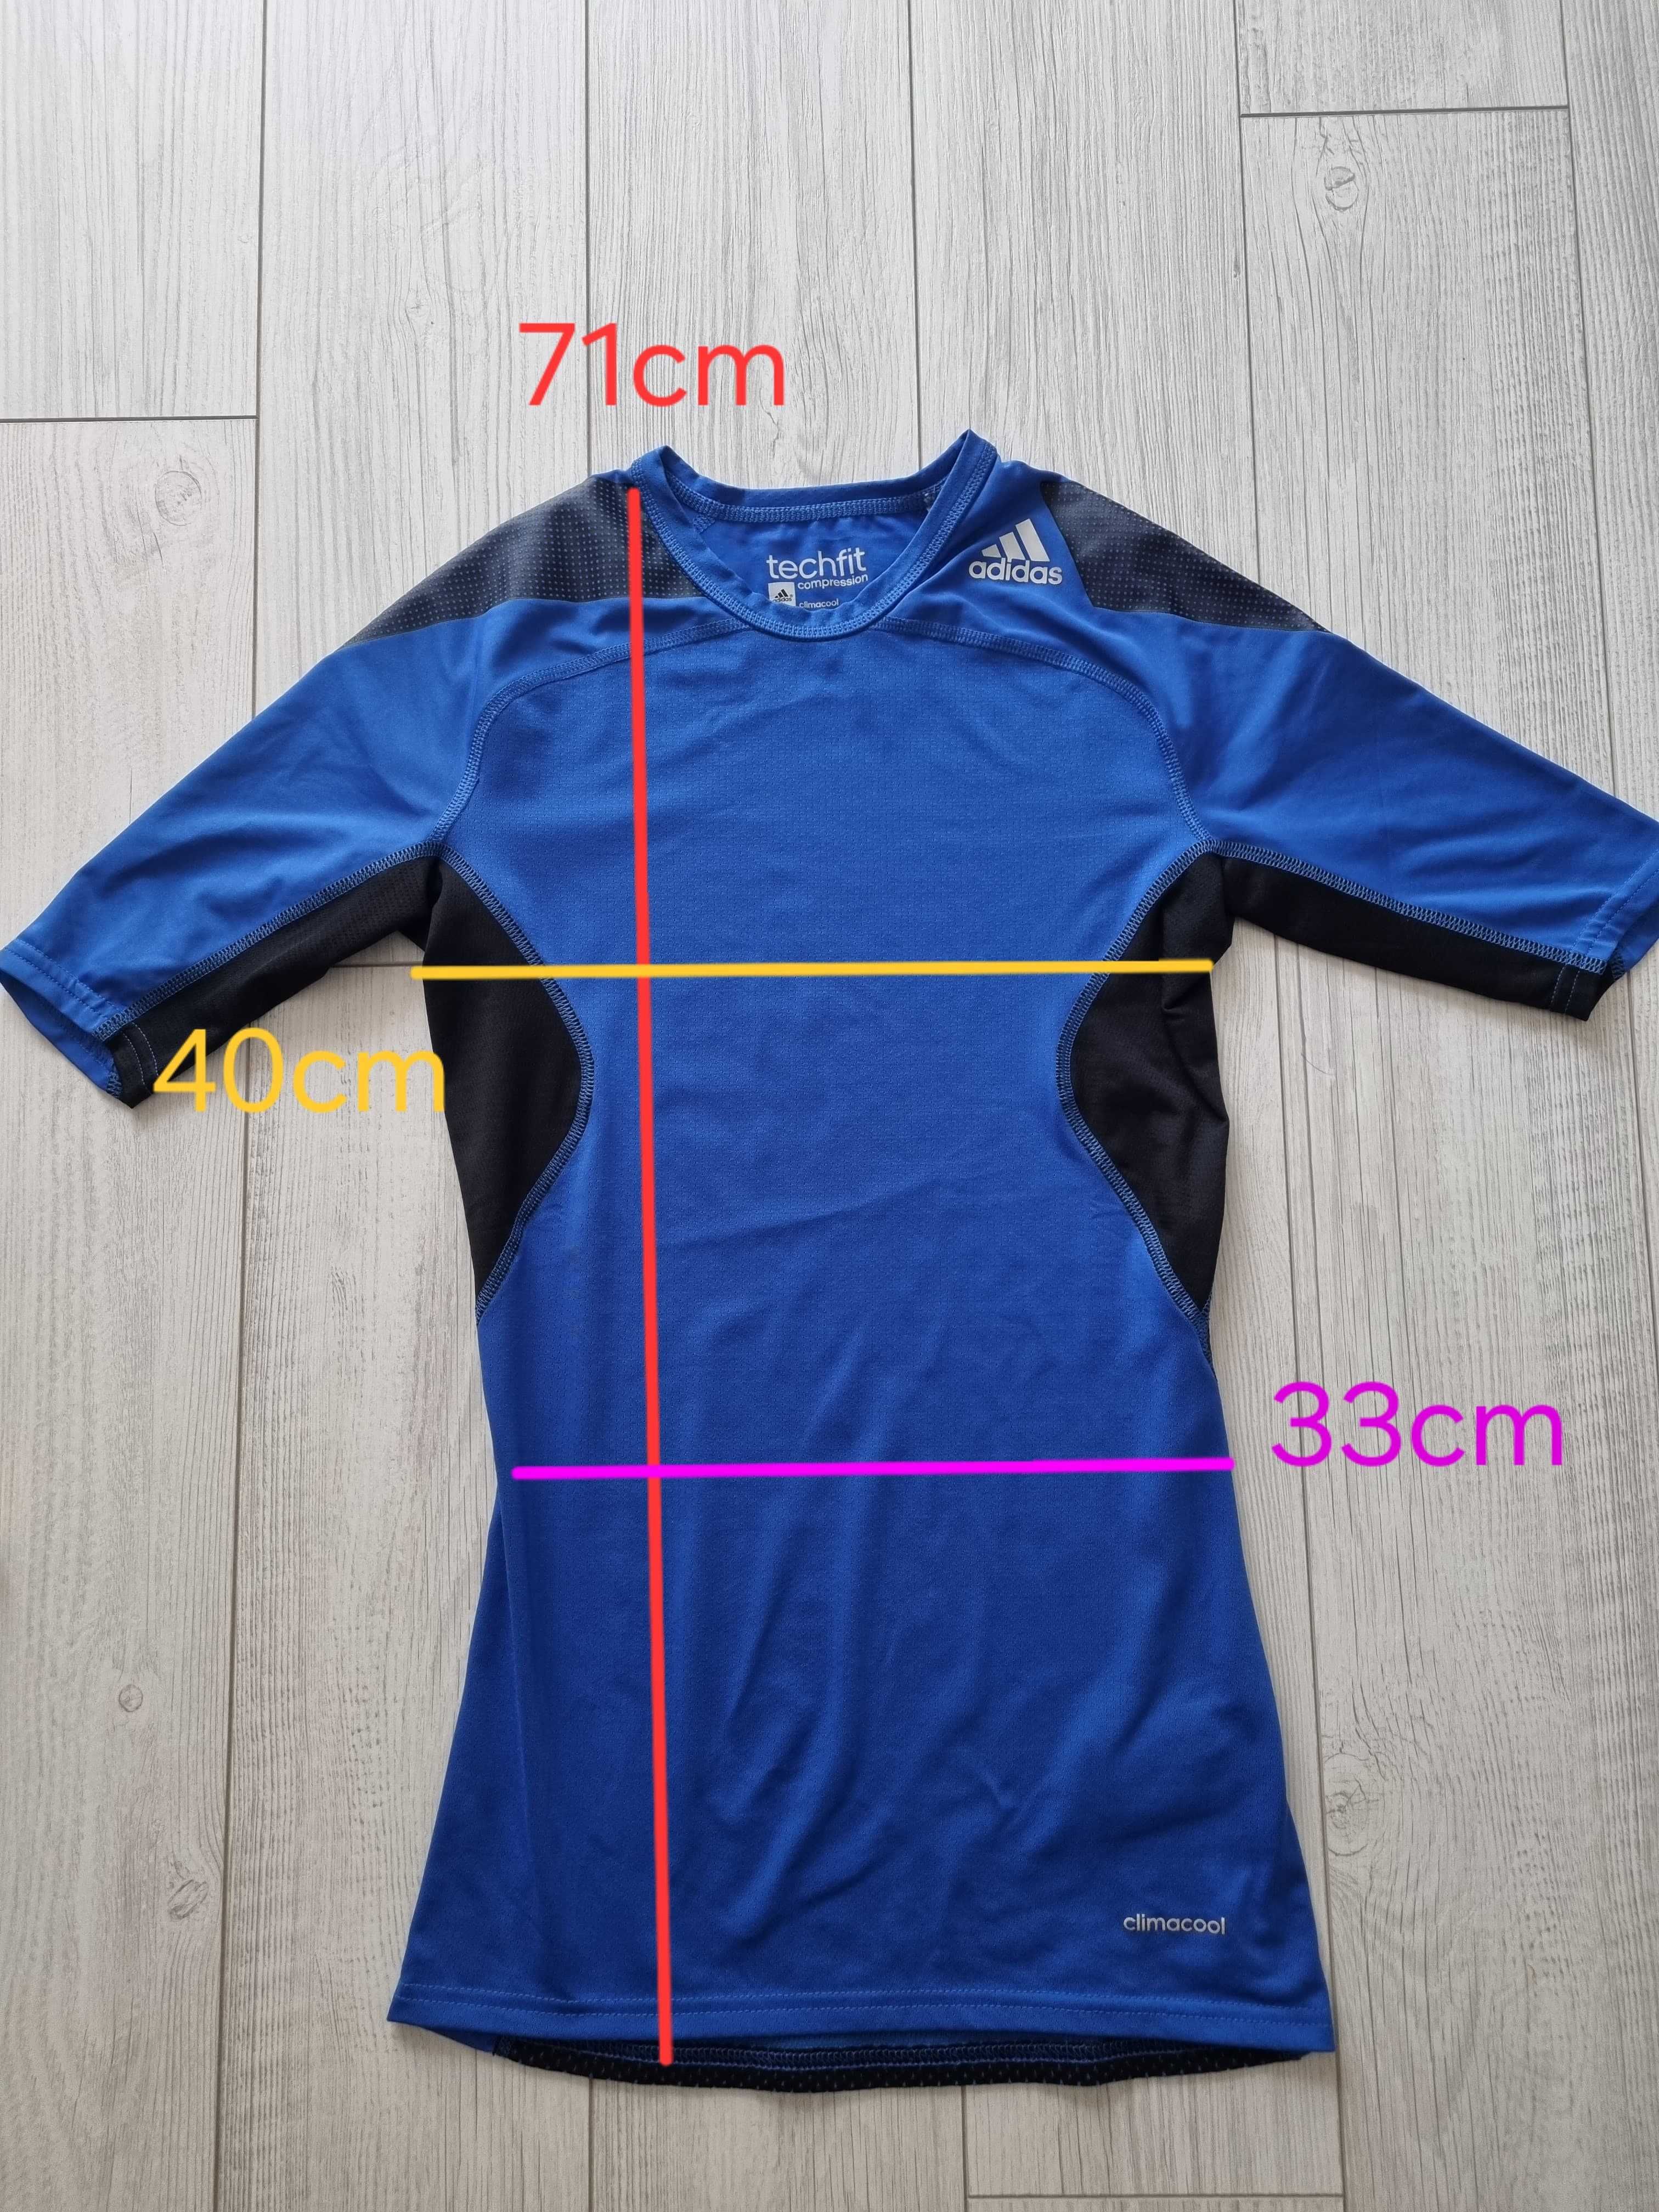 Adidas Techfit Compression T-shirt, Size S